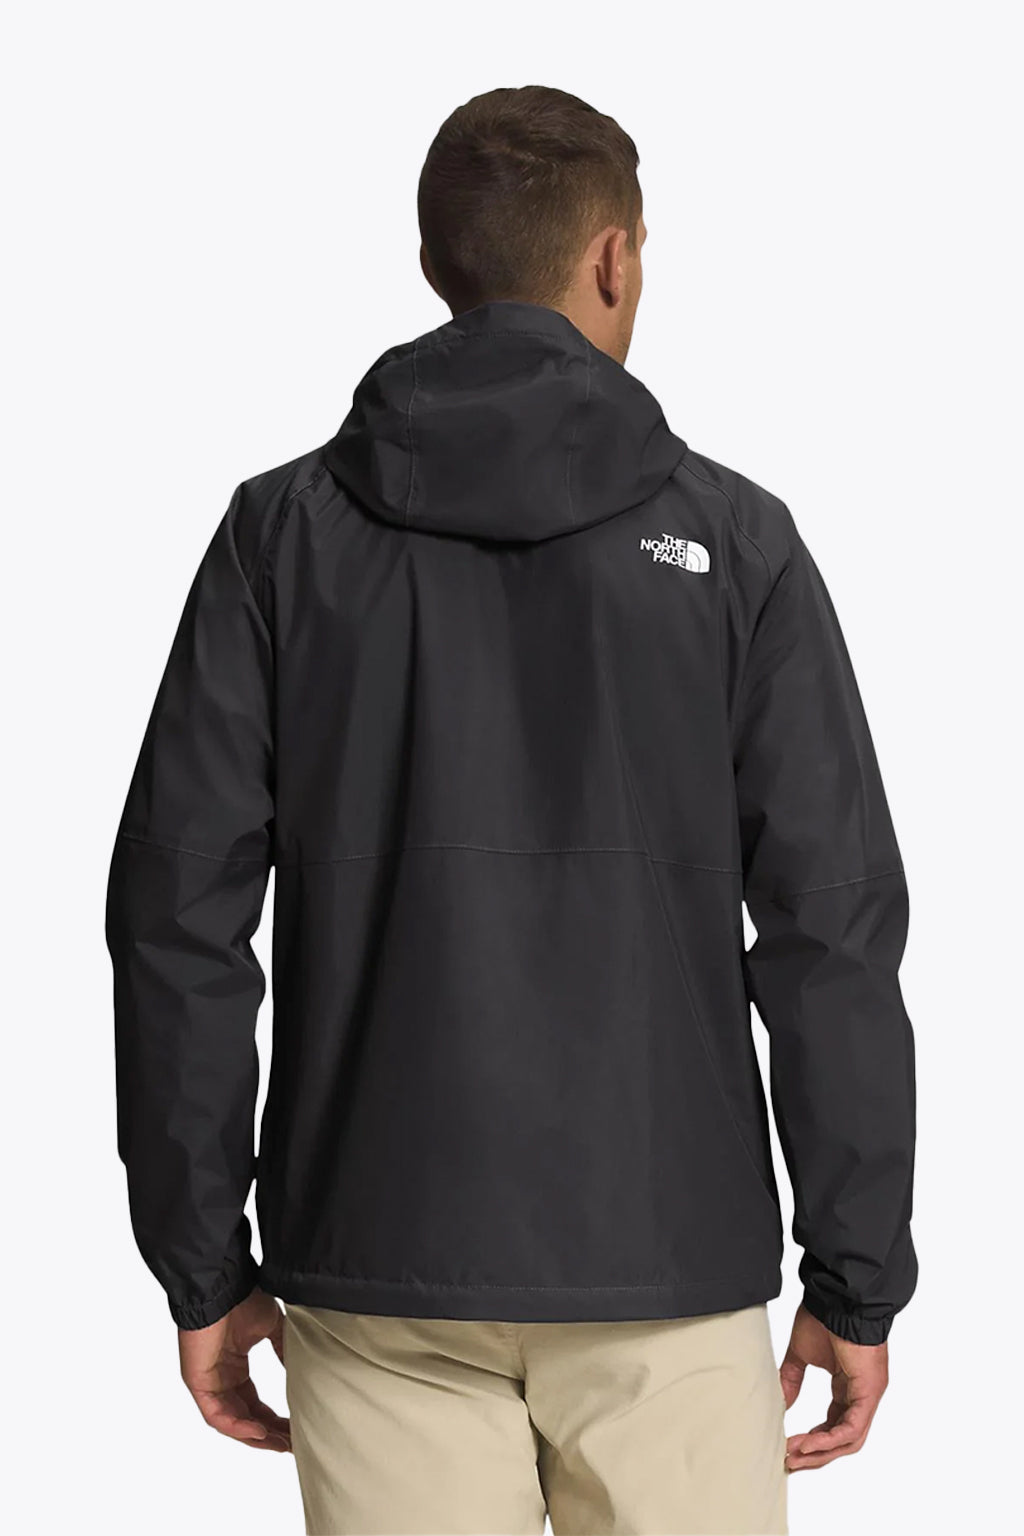 alt-image__Black-nylon-hoodie-rain-jacket---Elements-rain-hoodie